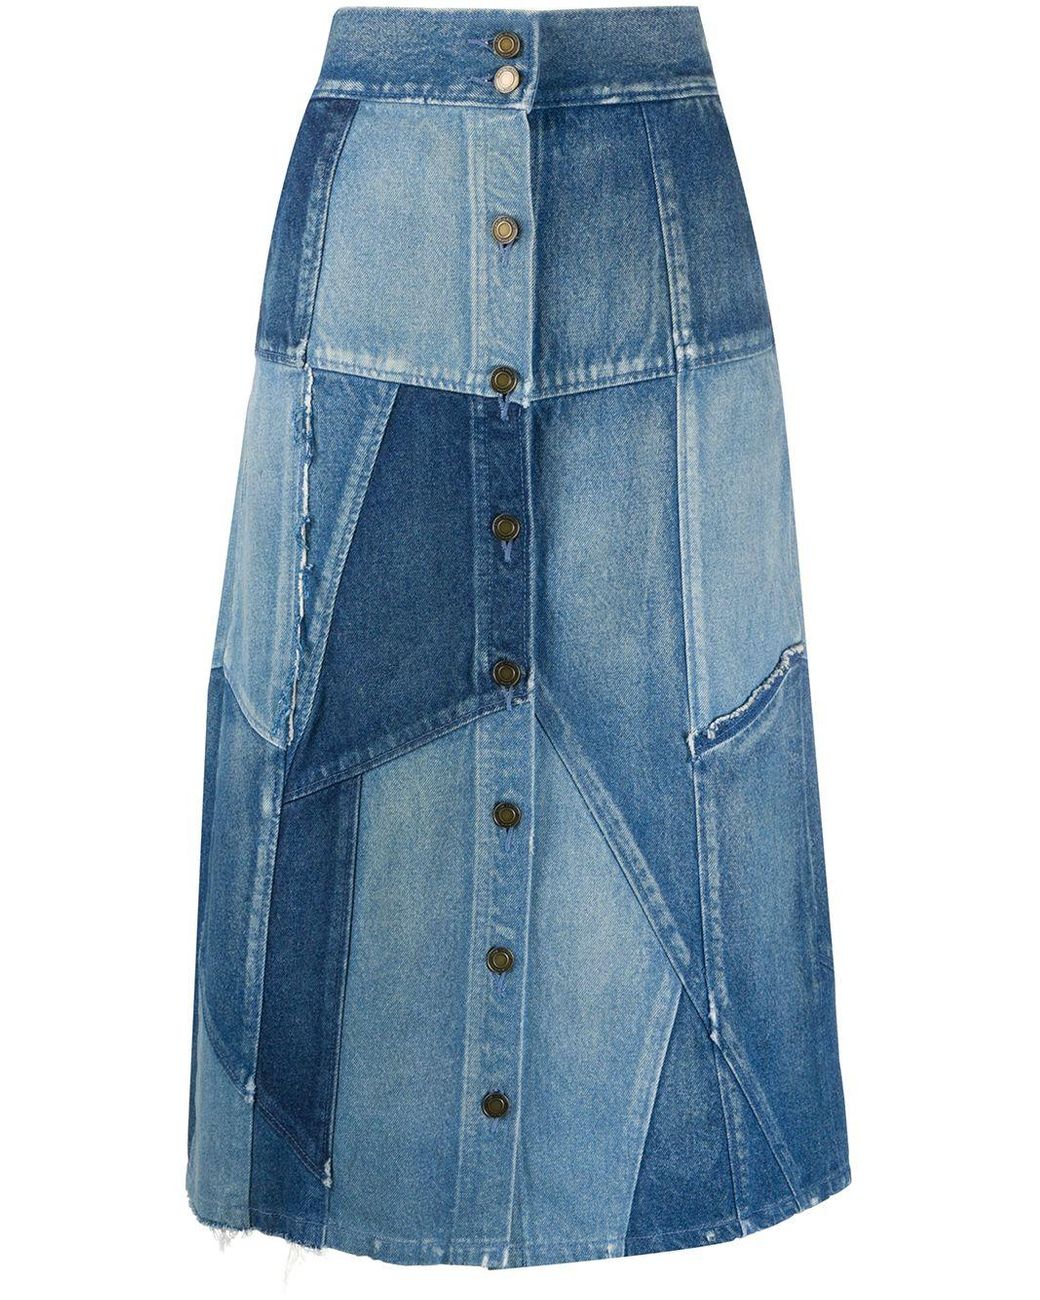 Saint Laurent Patchwork Denim Skirt in Blue | Lyst